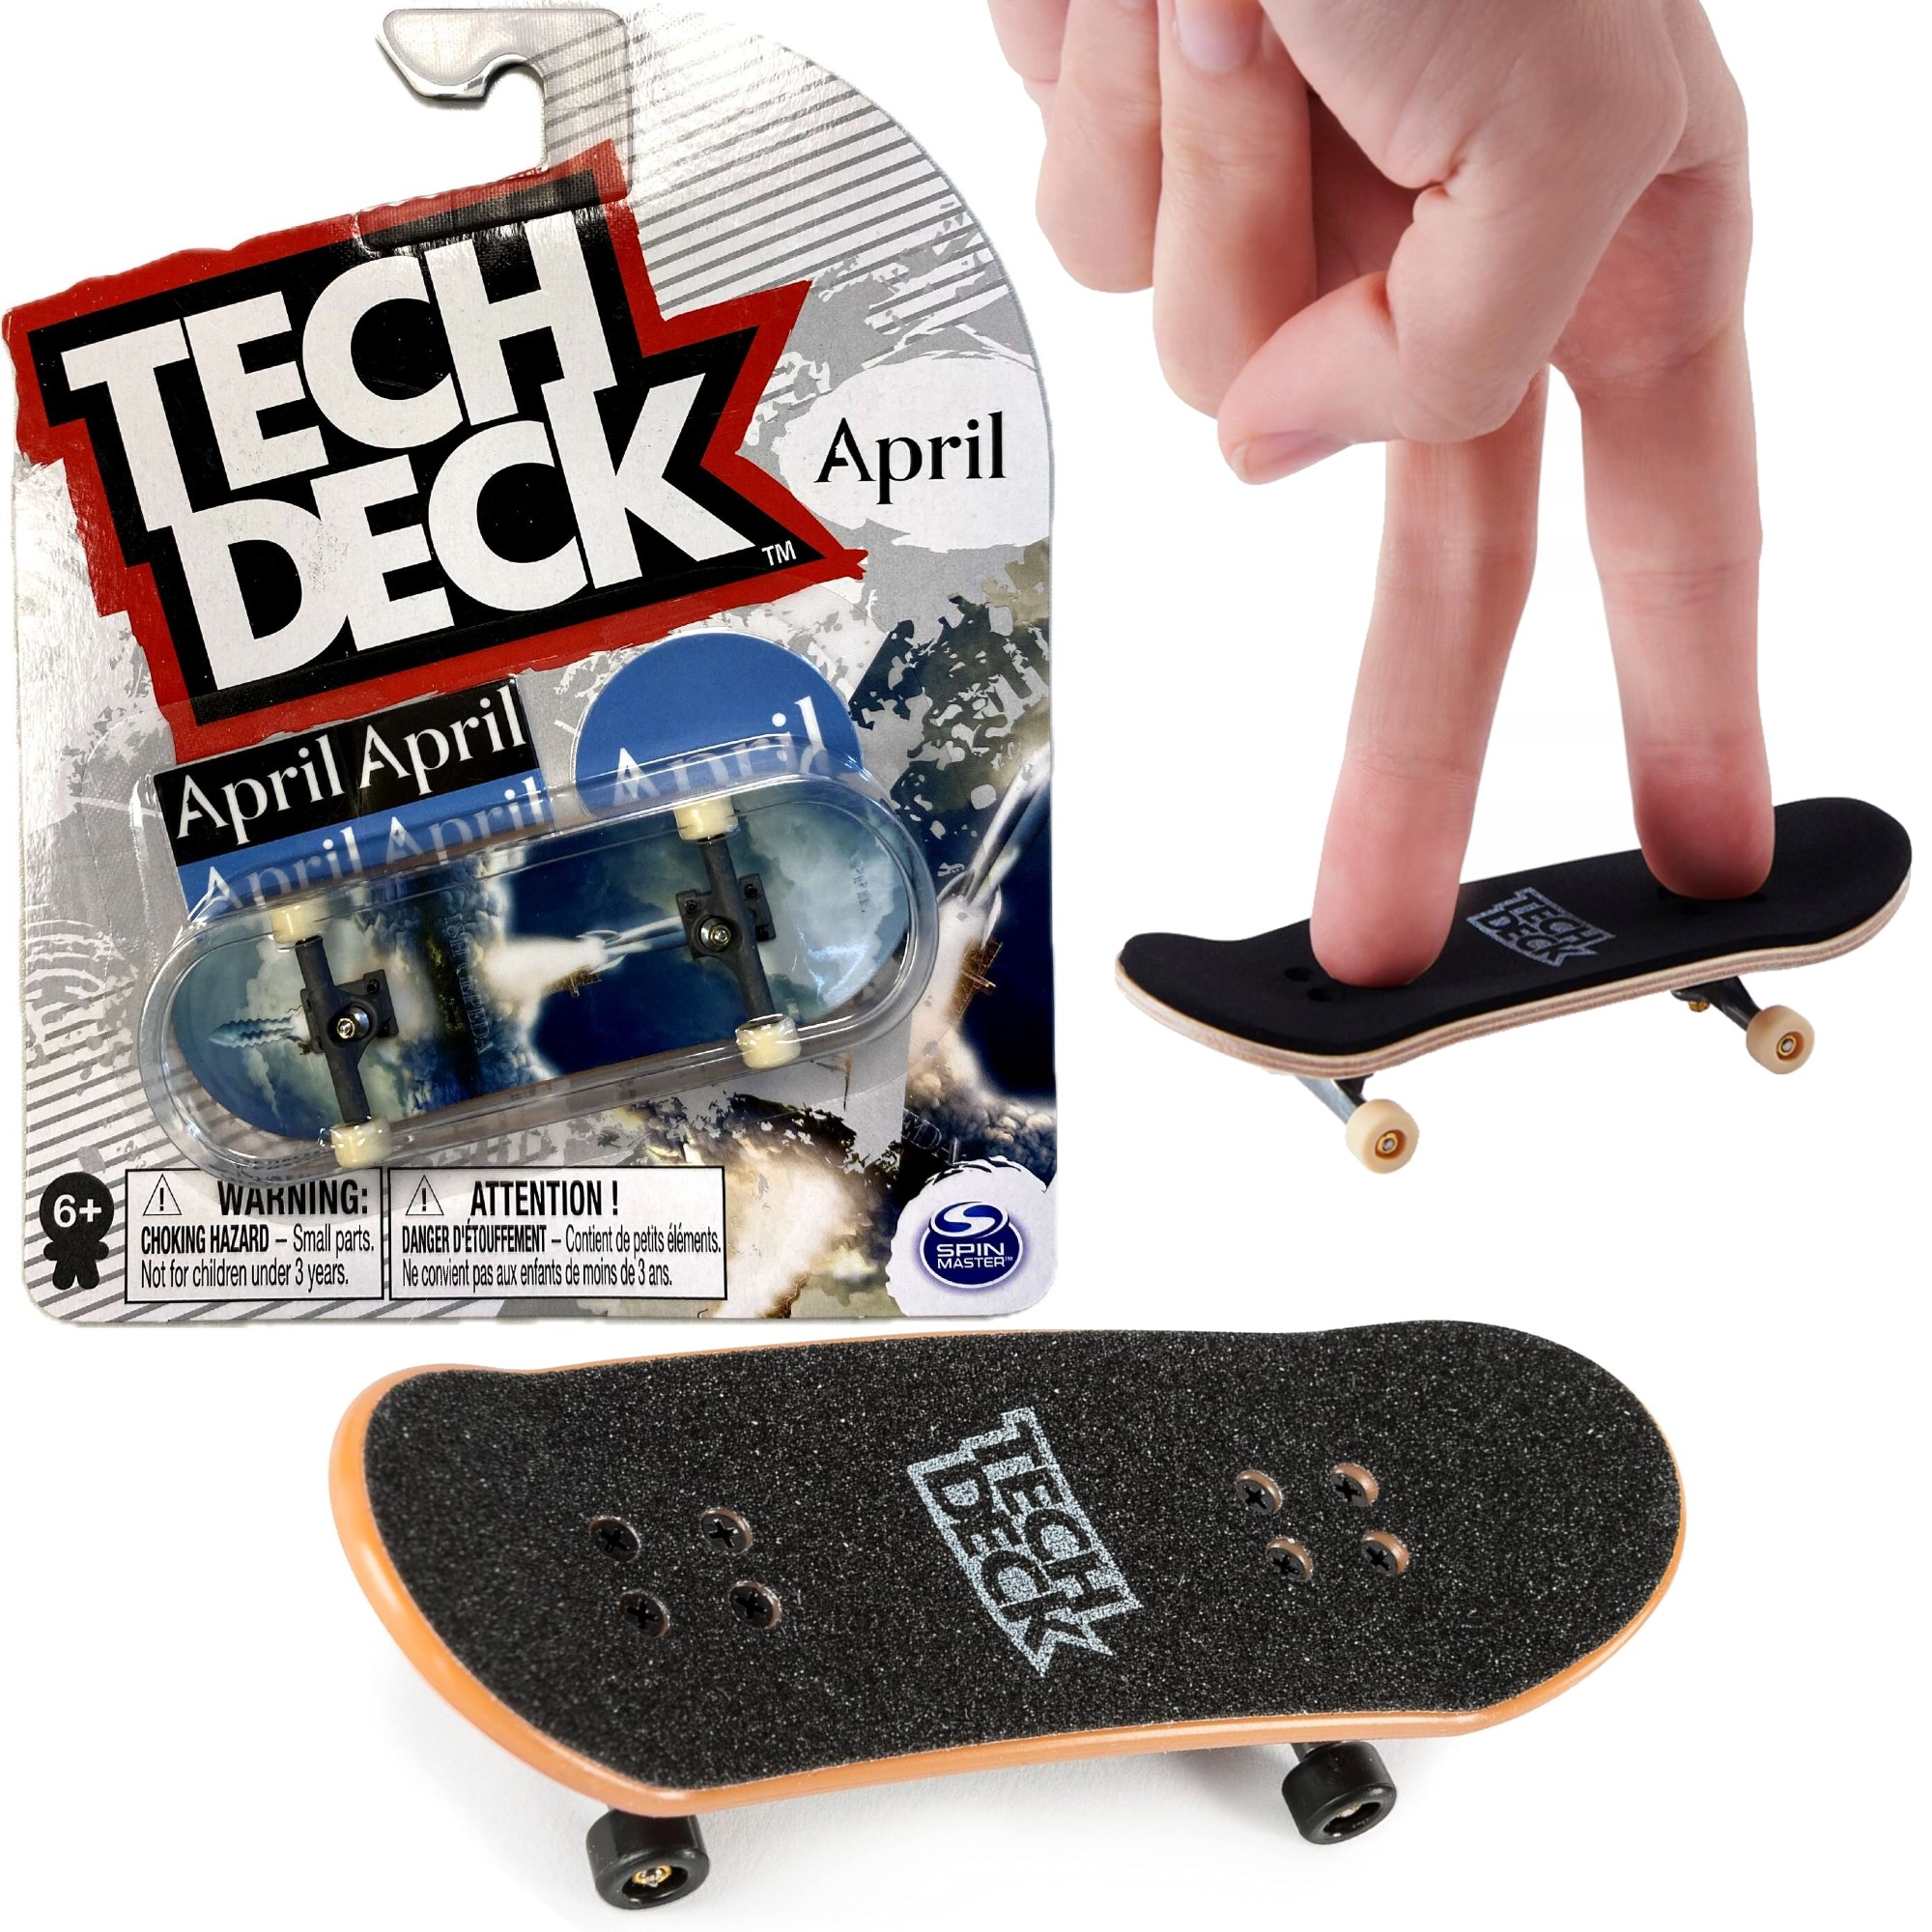 Tech Deck deskorolka fingerboard April Ish Cepeda + naklejki